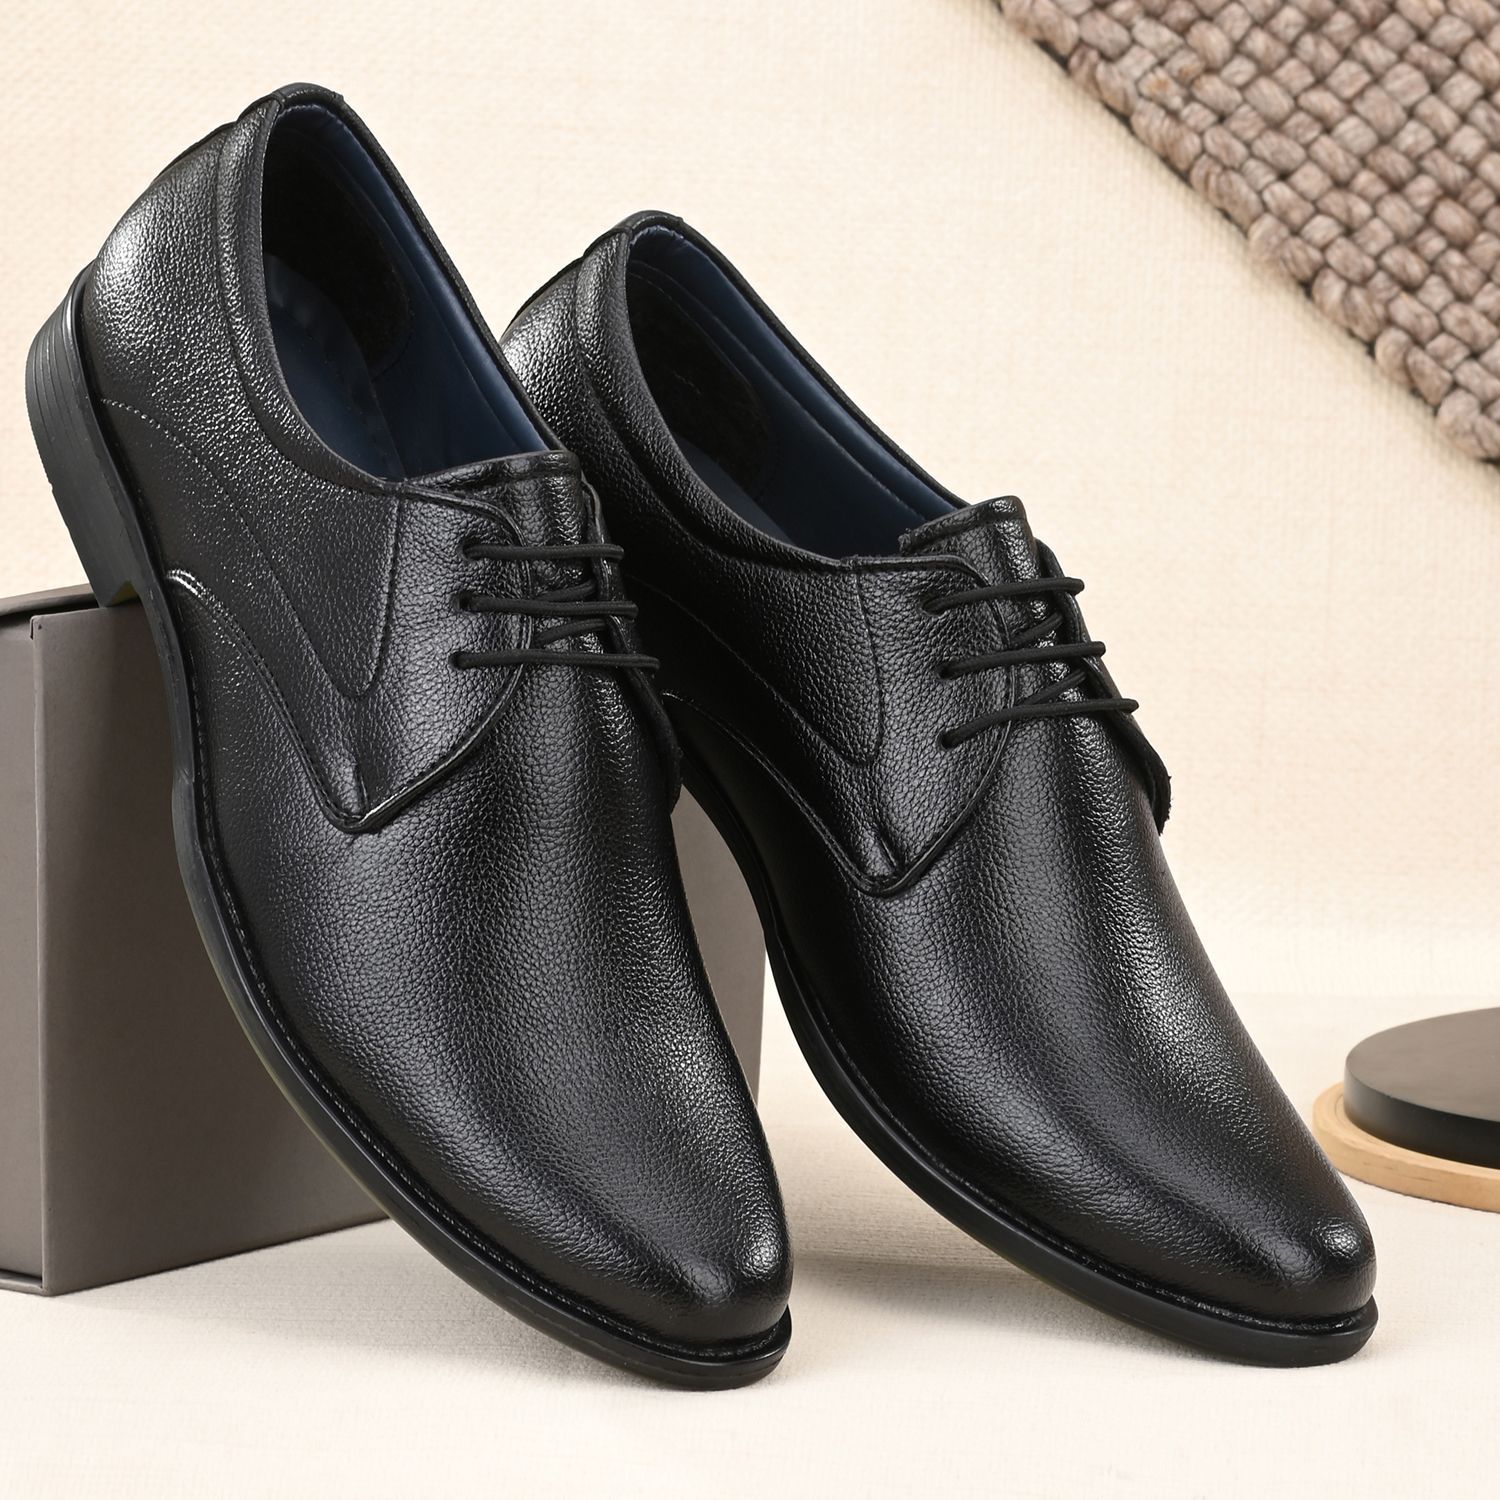     			John Karsun - Black Men's Derby Formal Shoes